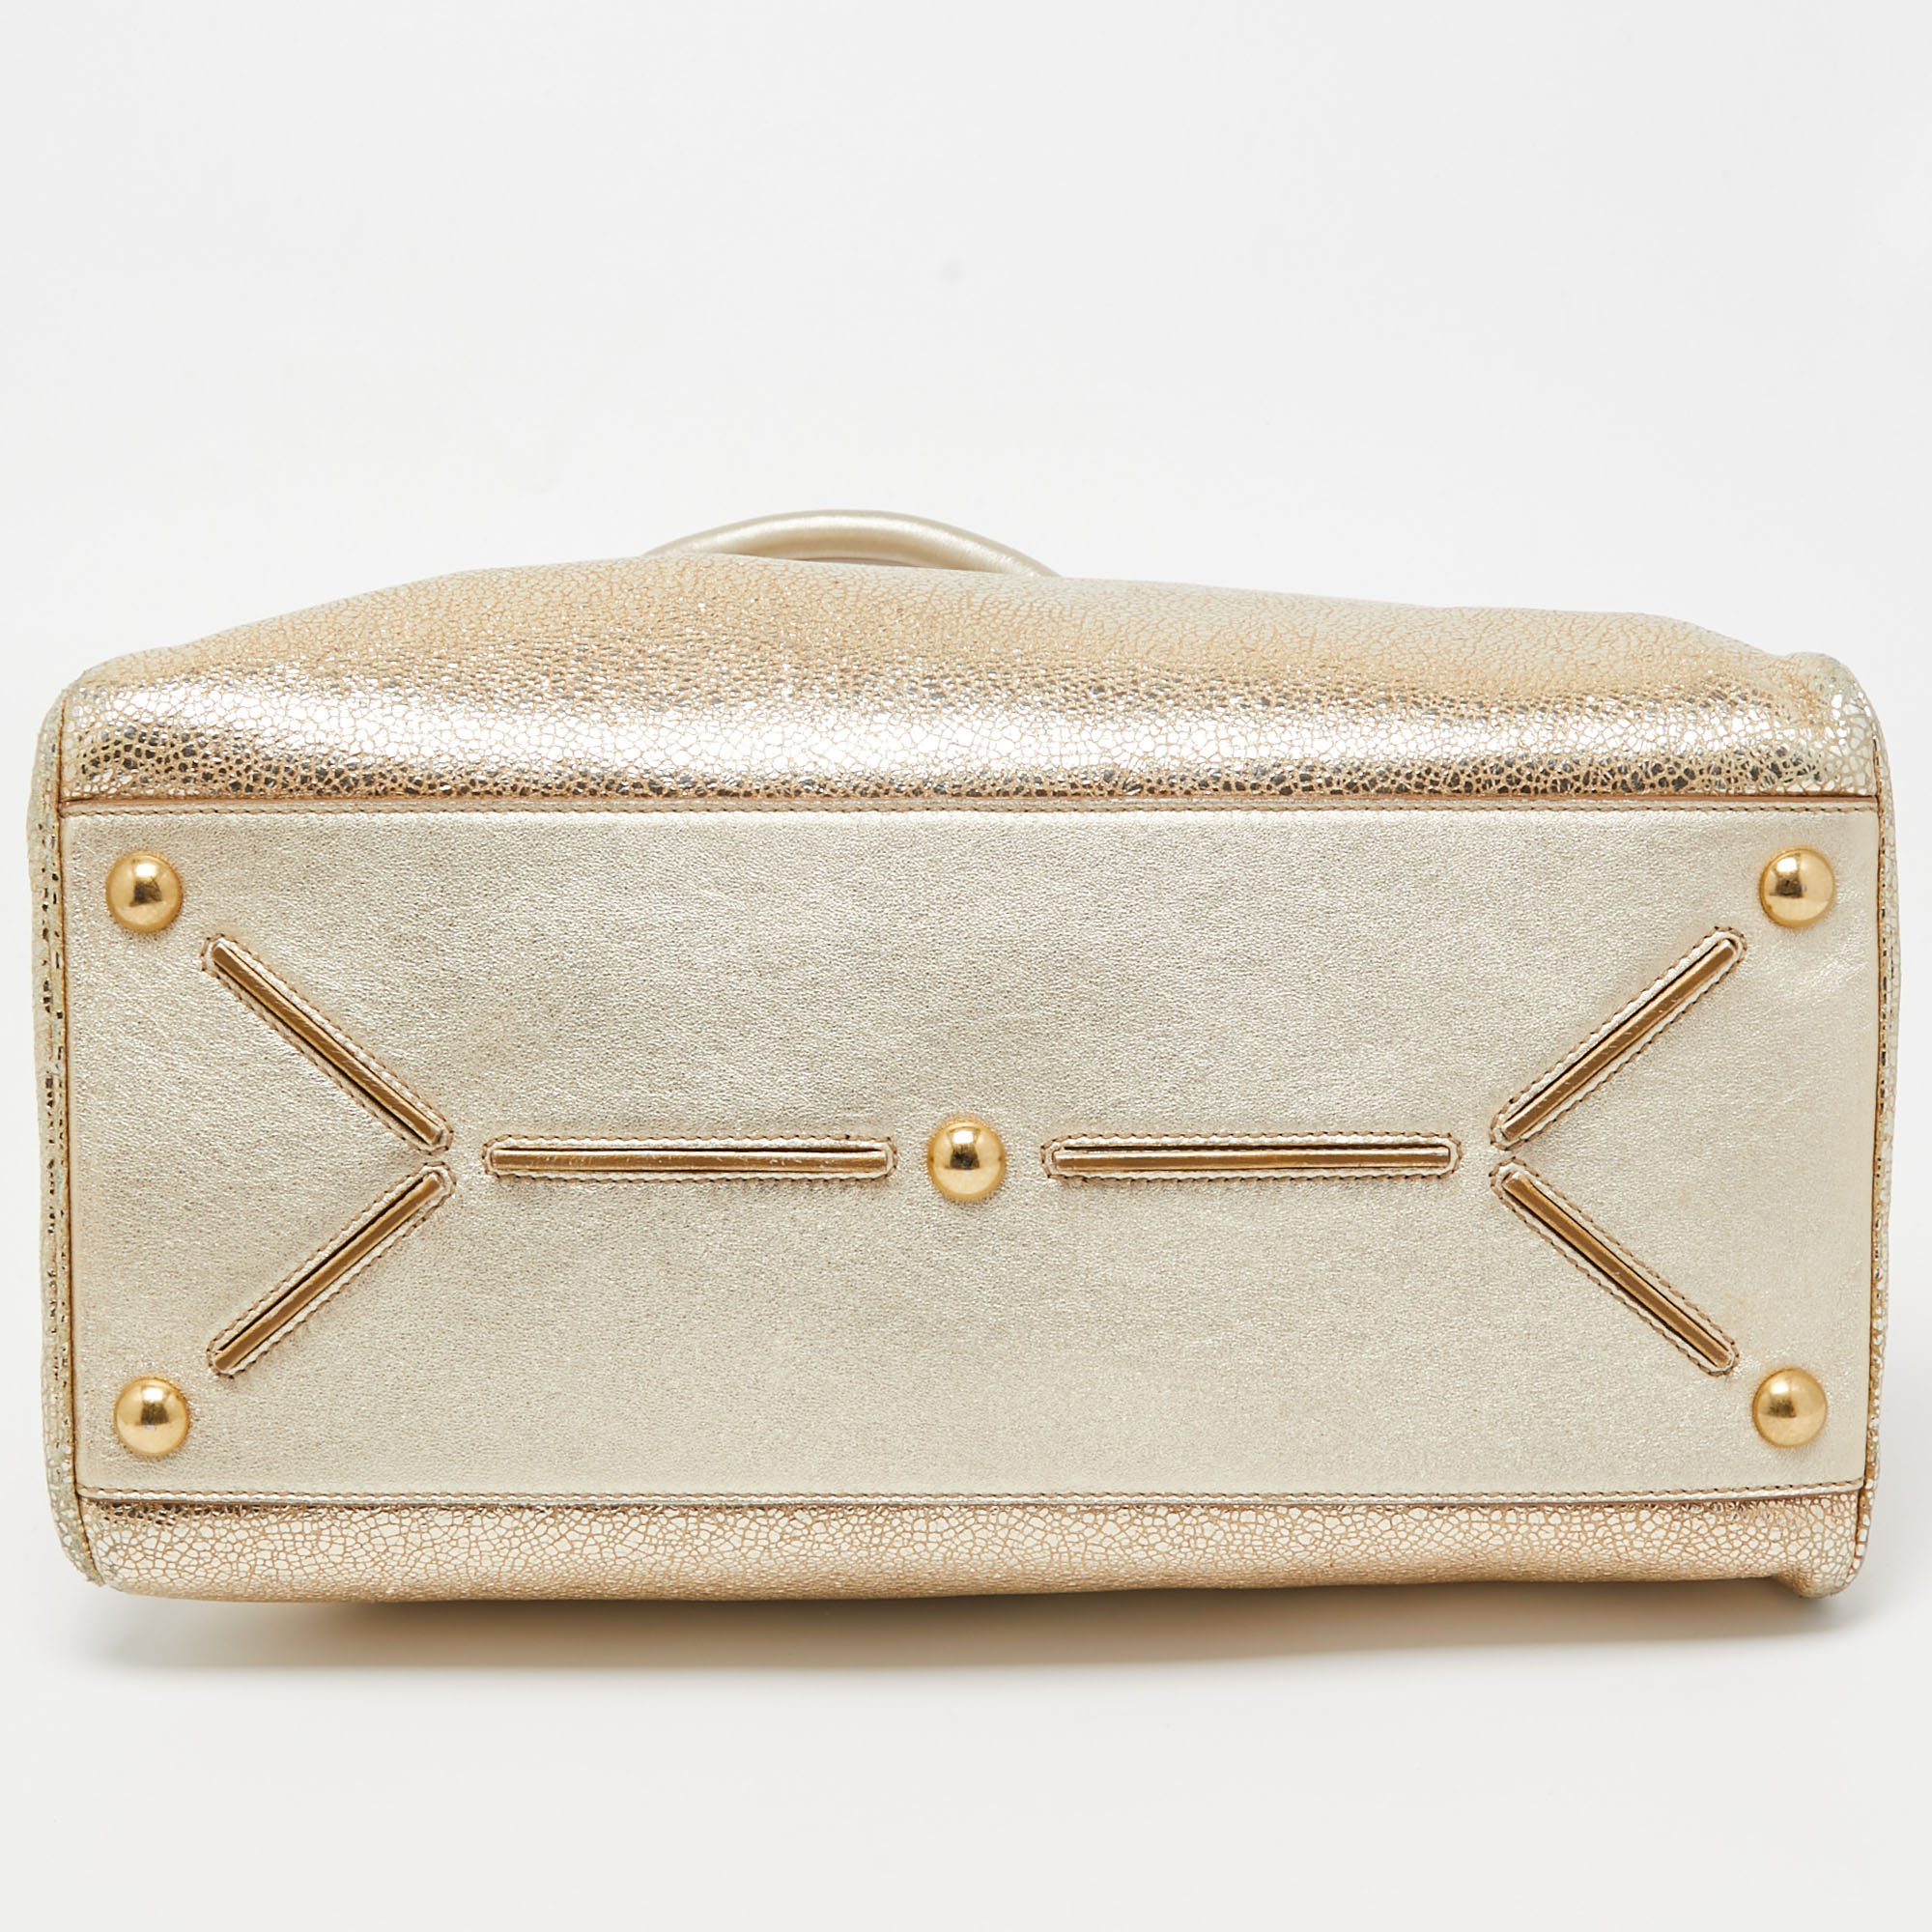 Saint Laurent Gold Textured Leather Medium Majorelle Bag